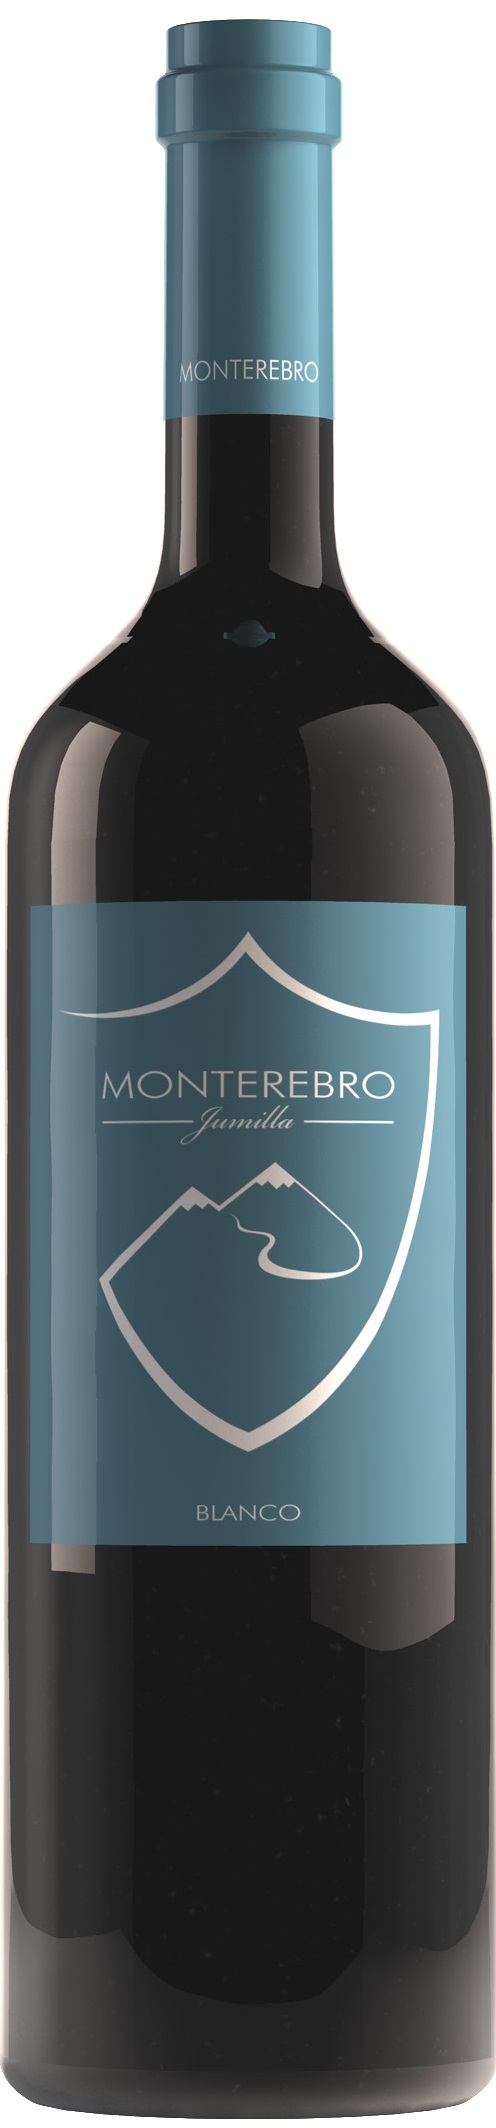 Image of Wine bottle Monterebro Blanco